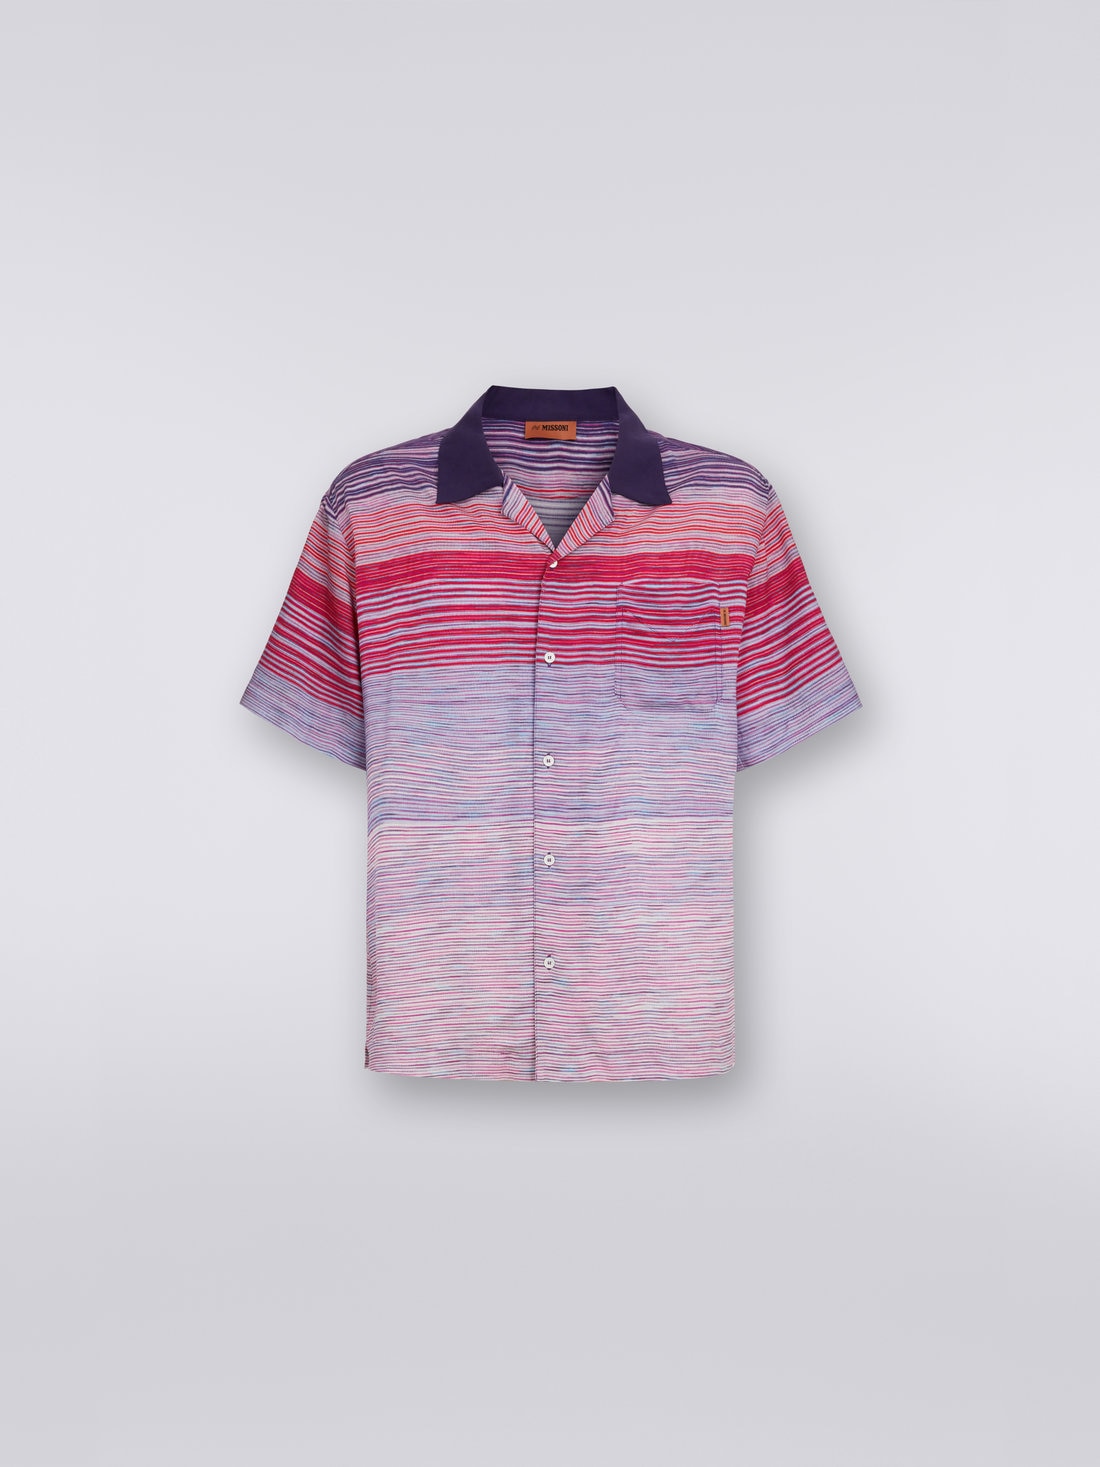 Short-sleeved cotton bowling shirt, Red, Purple & Light Blue - US23SJ0RBW00M5F402H - 0